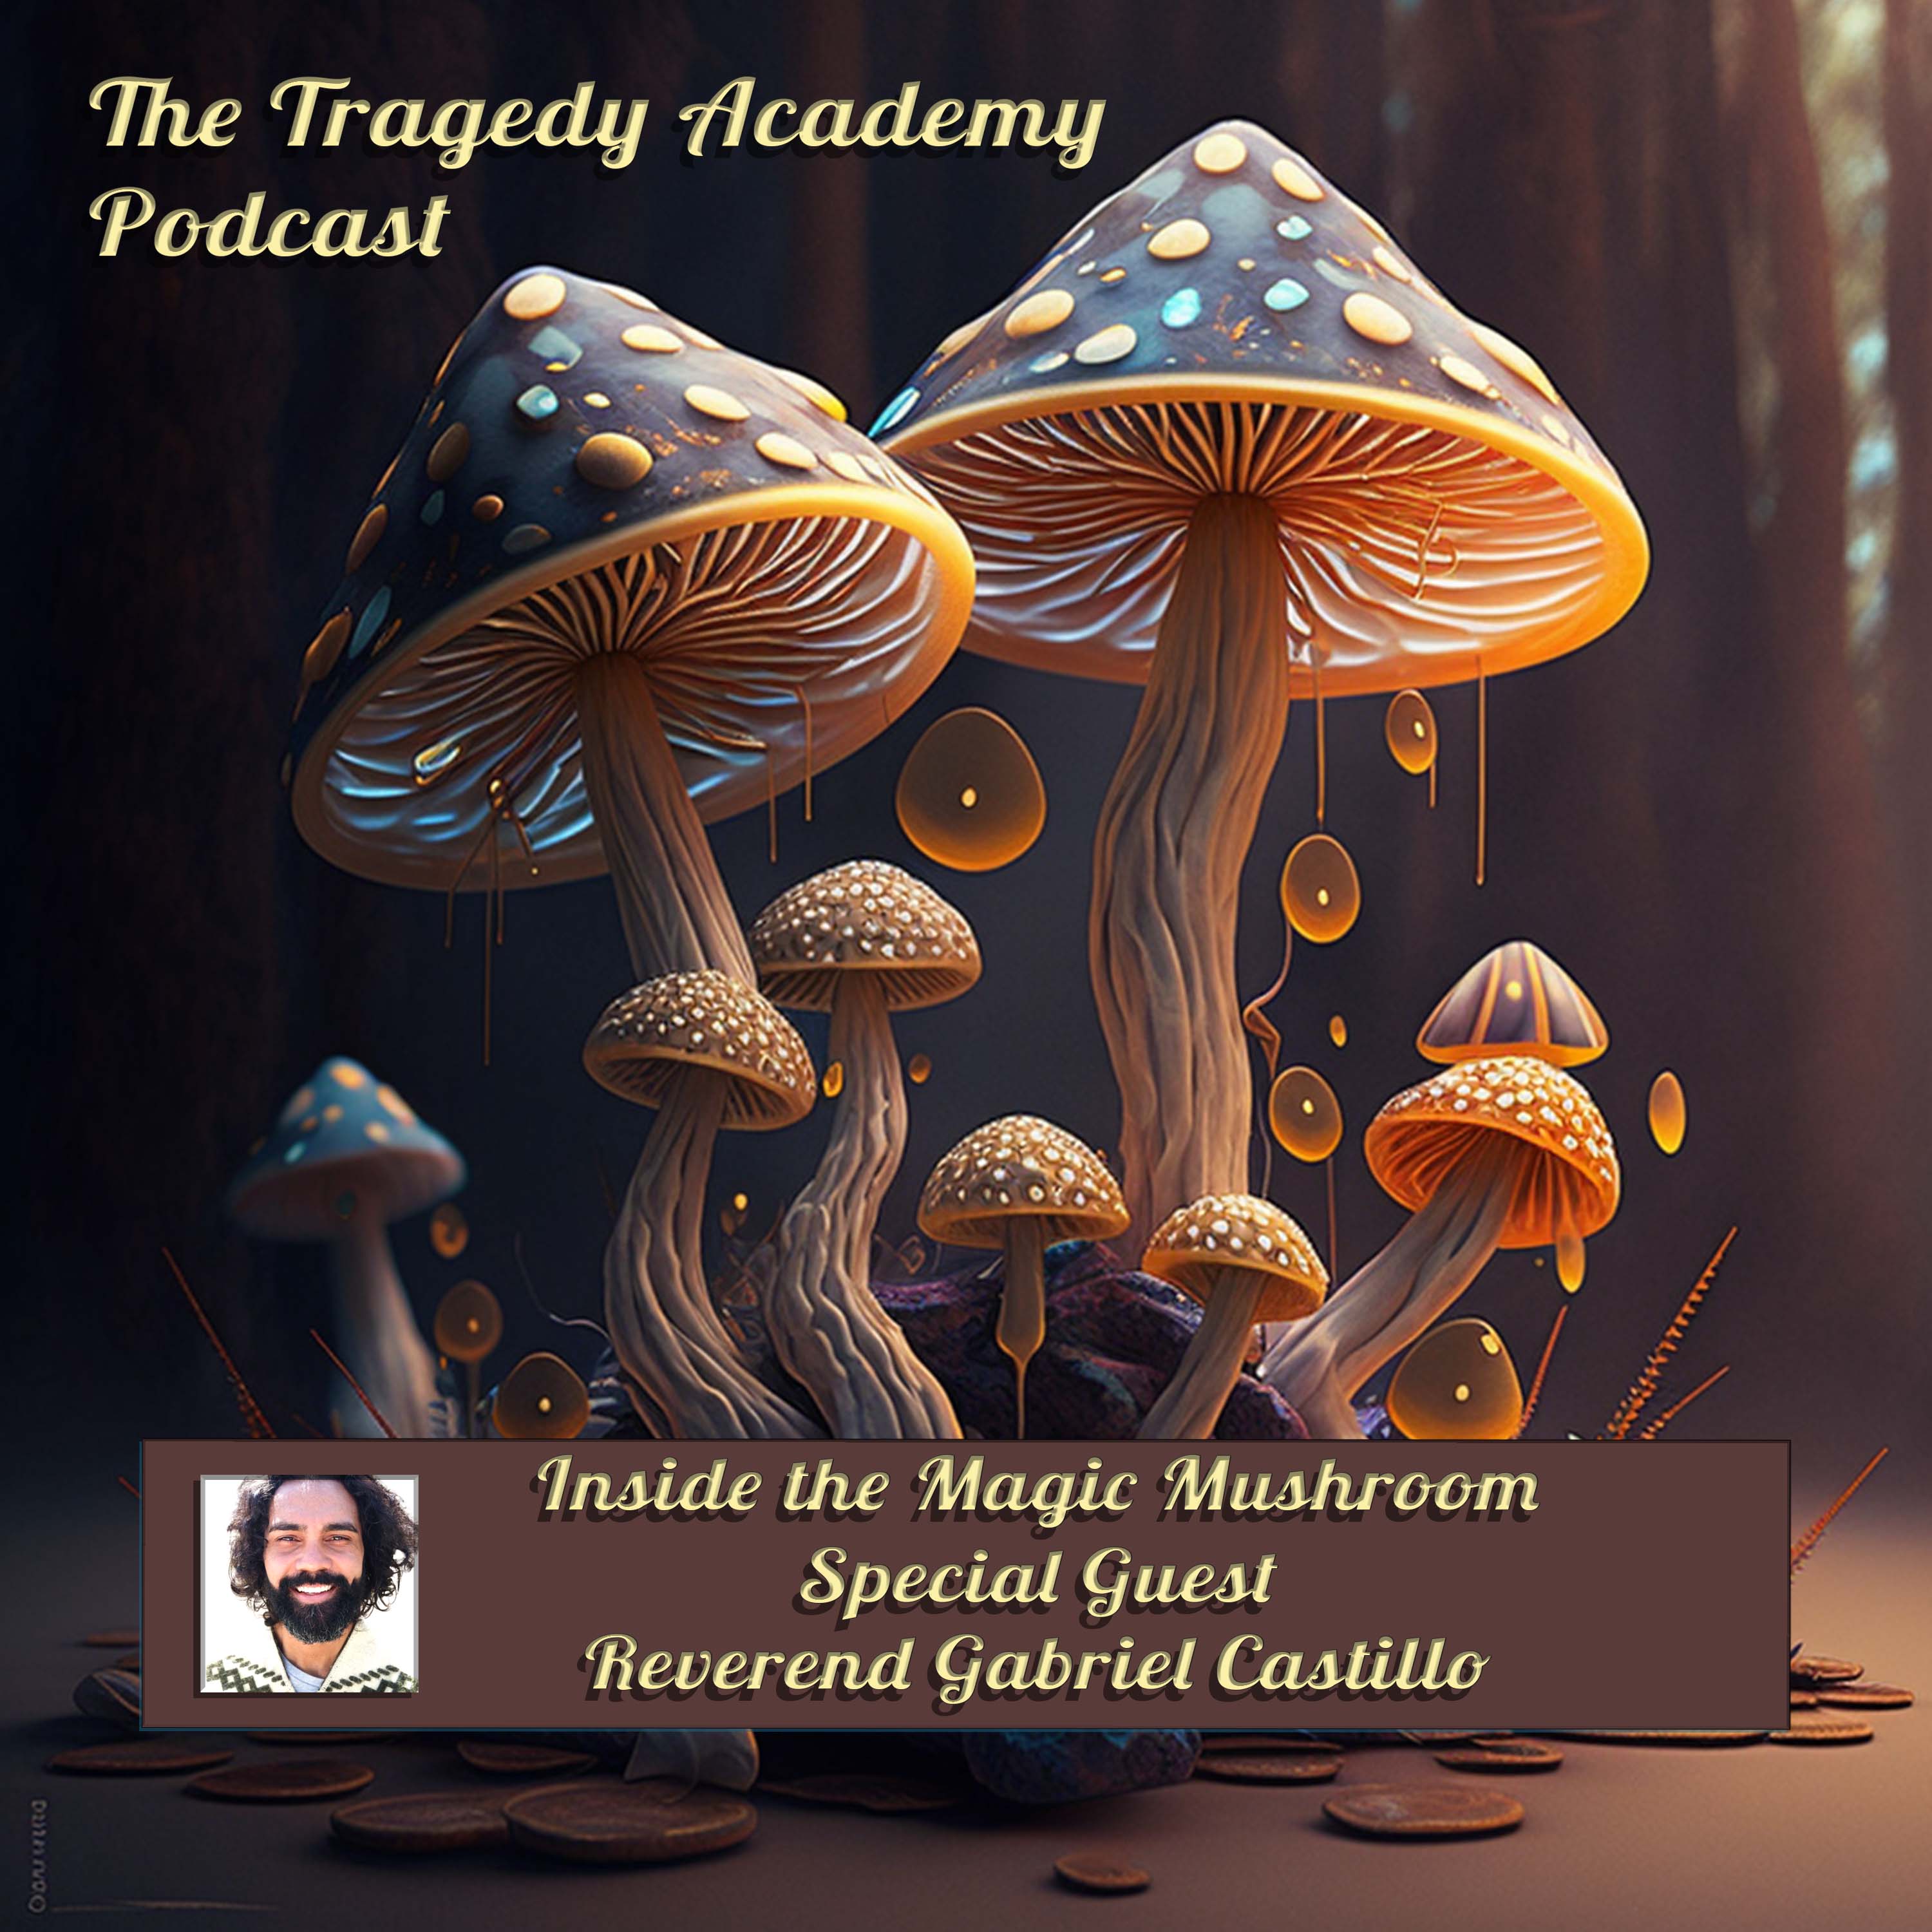 Inside the Magic Mushroom with Special Guest Rev. Gabriel Castillo